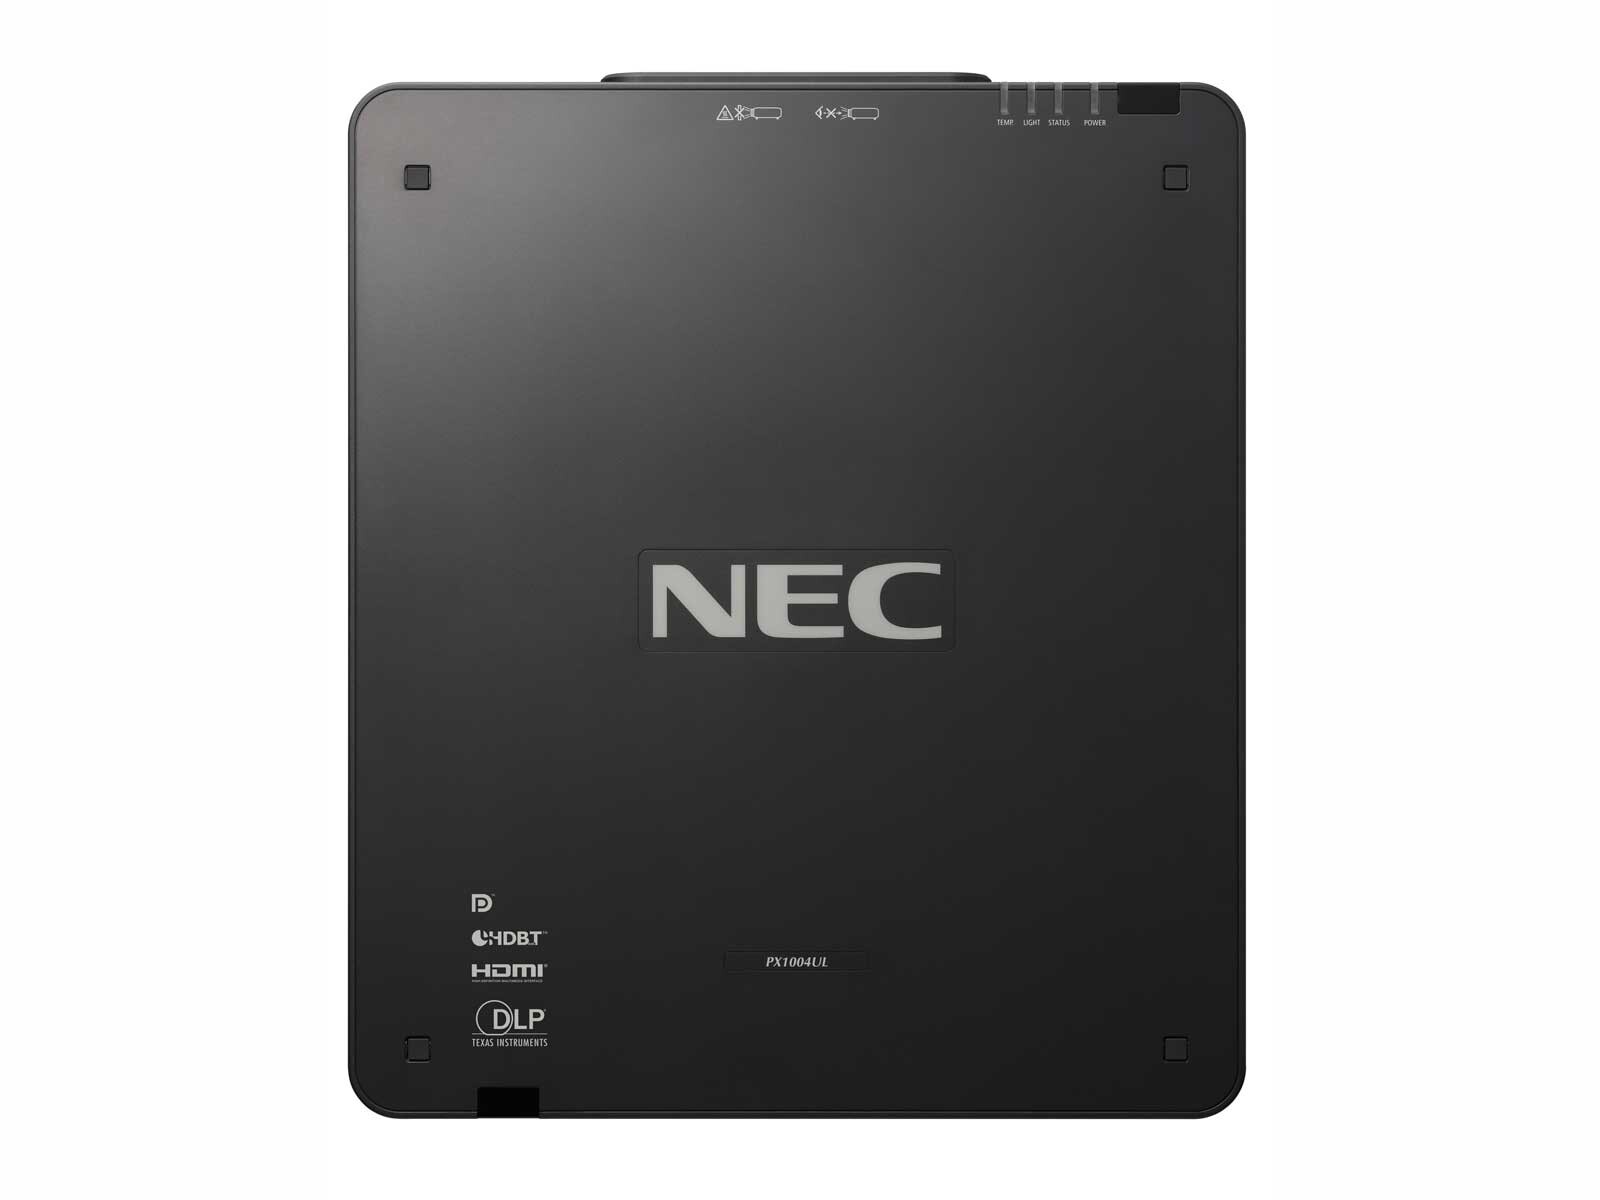 NEC-PX1004UL-BK